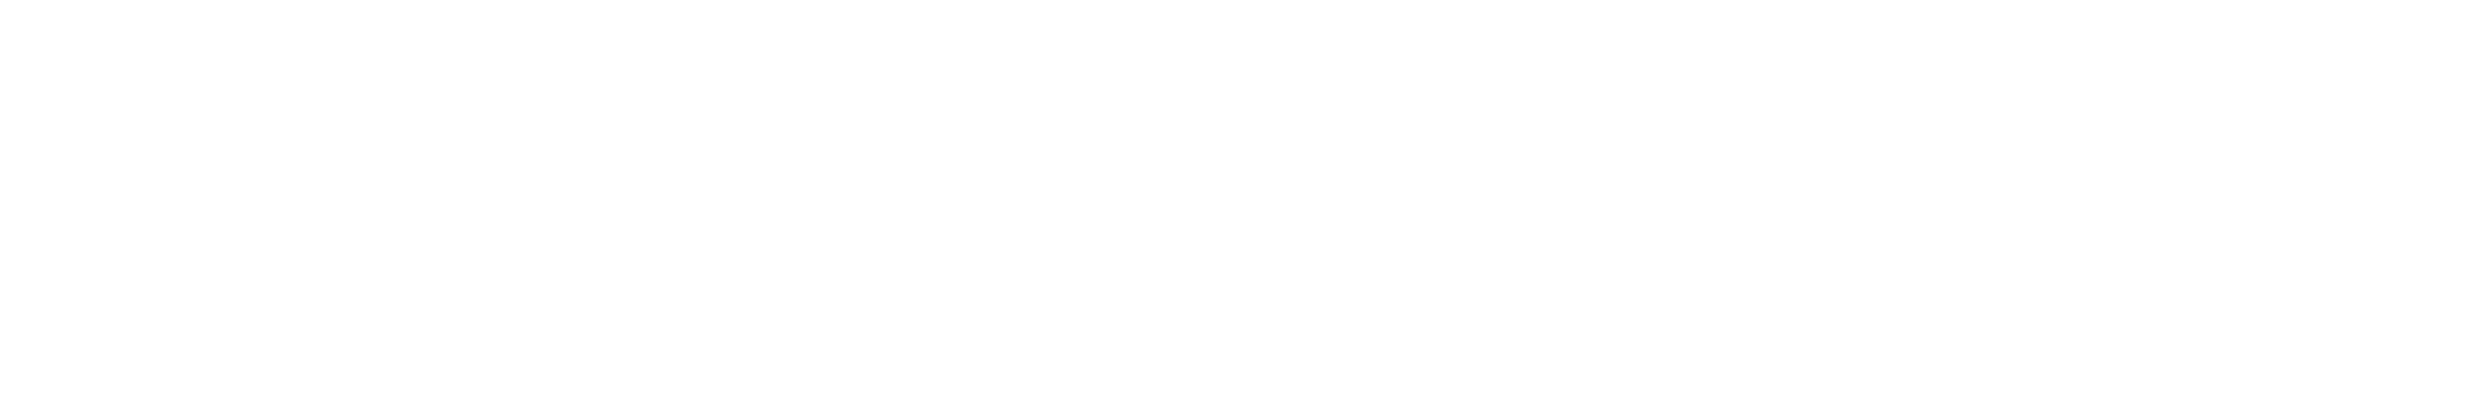 CC Logo horizontal-01